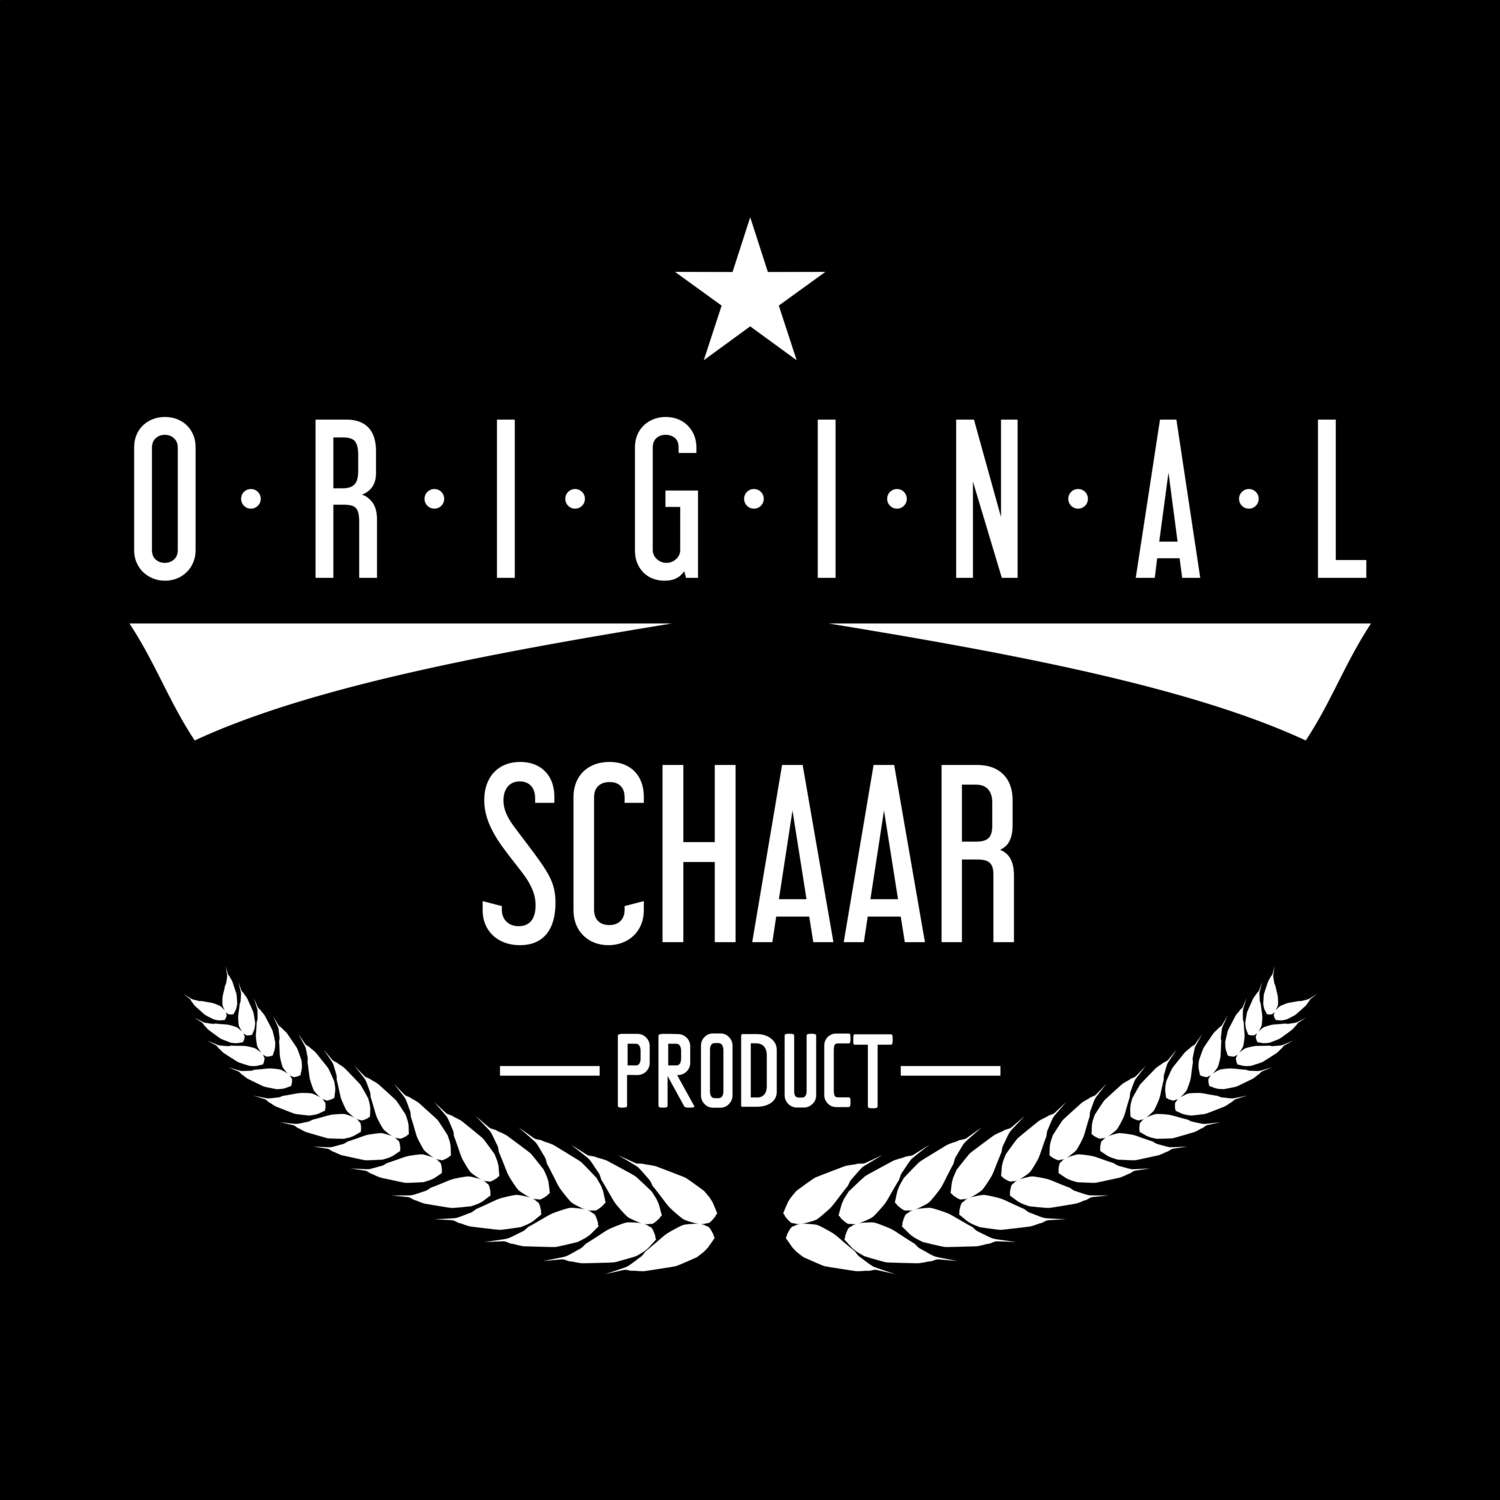 Schaar T-Shirt »Original Product«